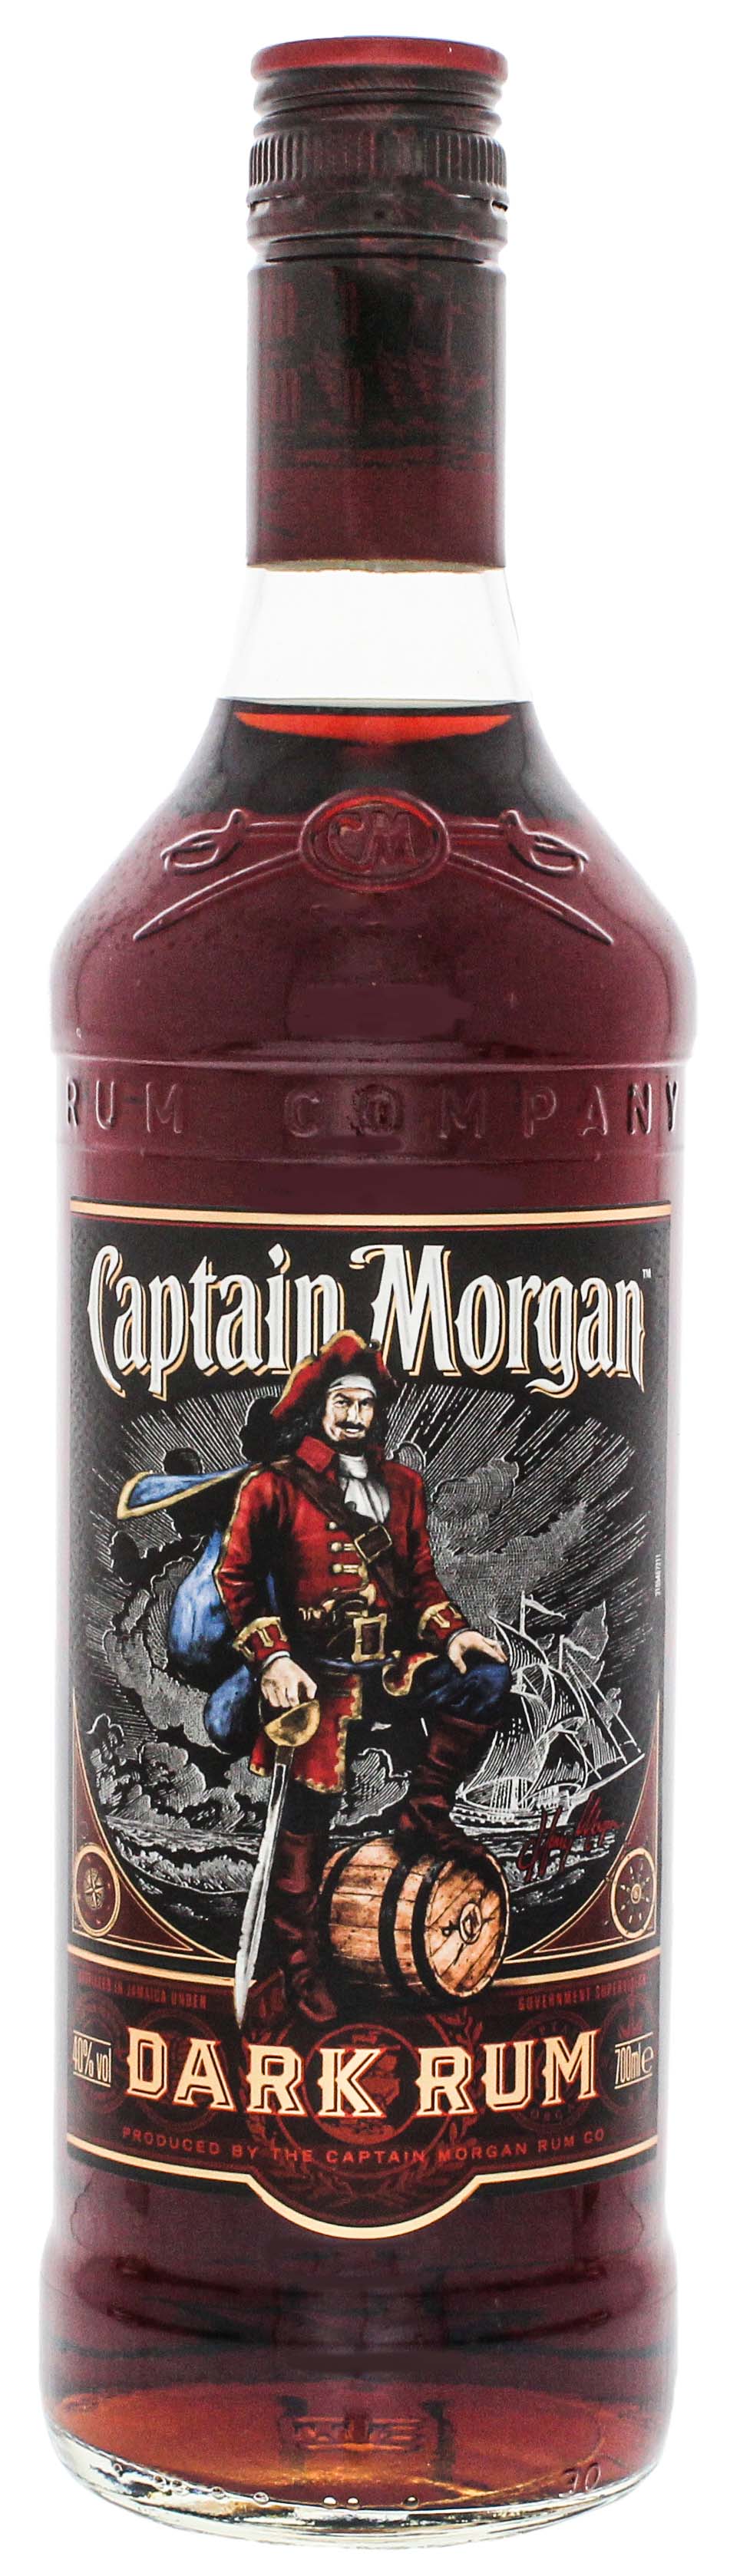 Captain Morgan Private Stock 0,7L (40% Vol.) - Captain Morgan - Rhum